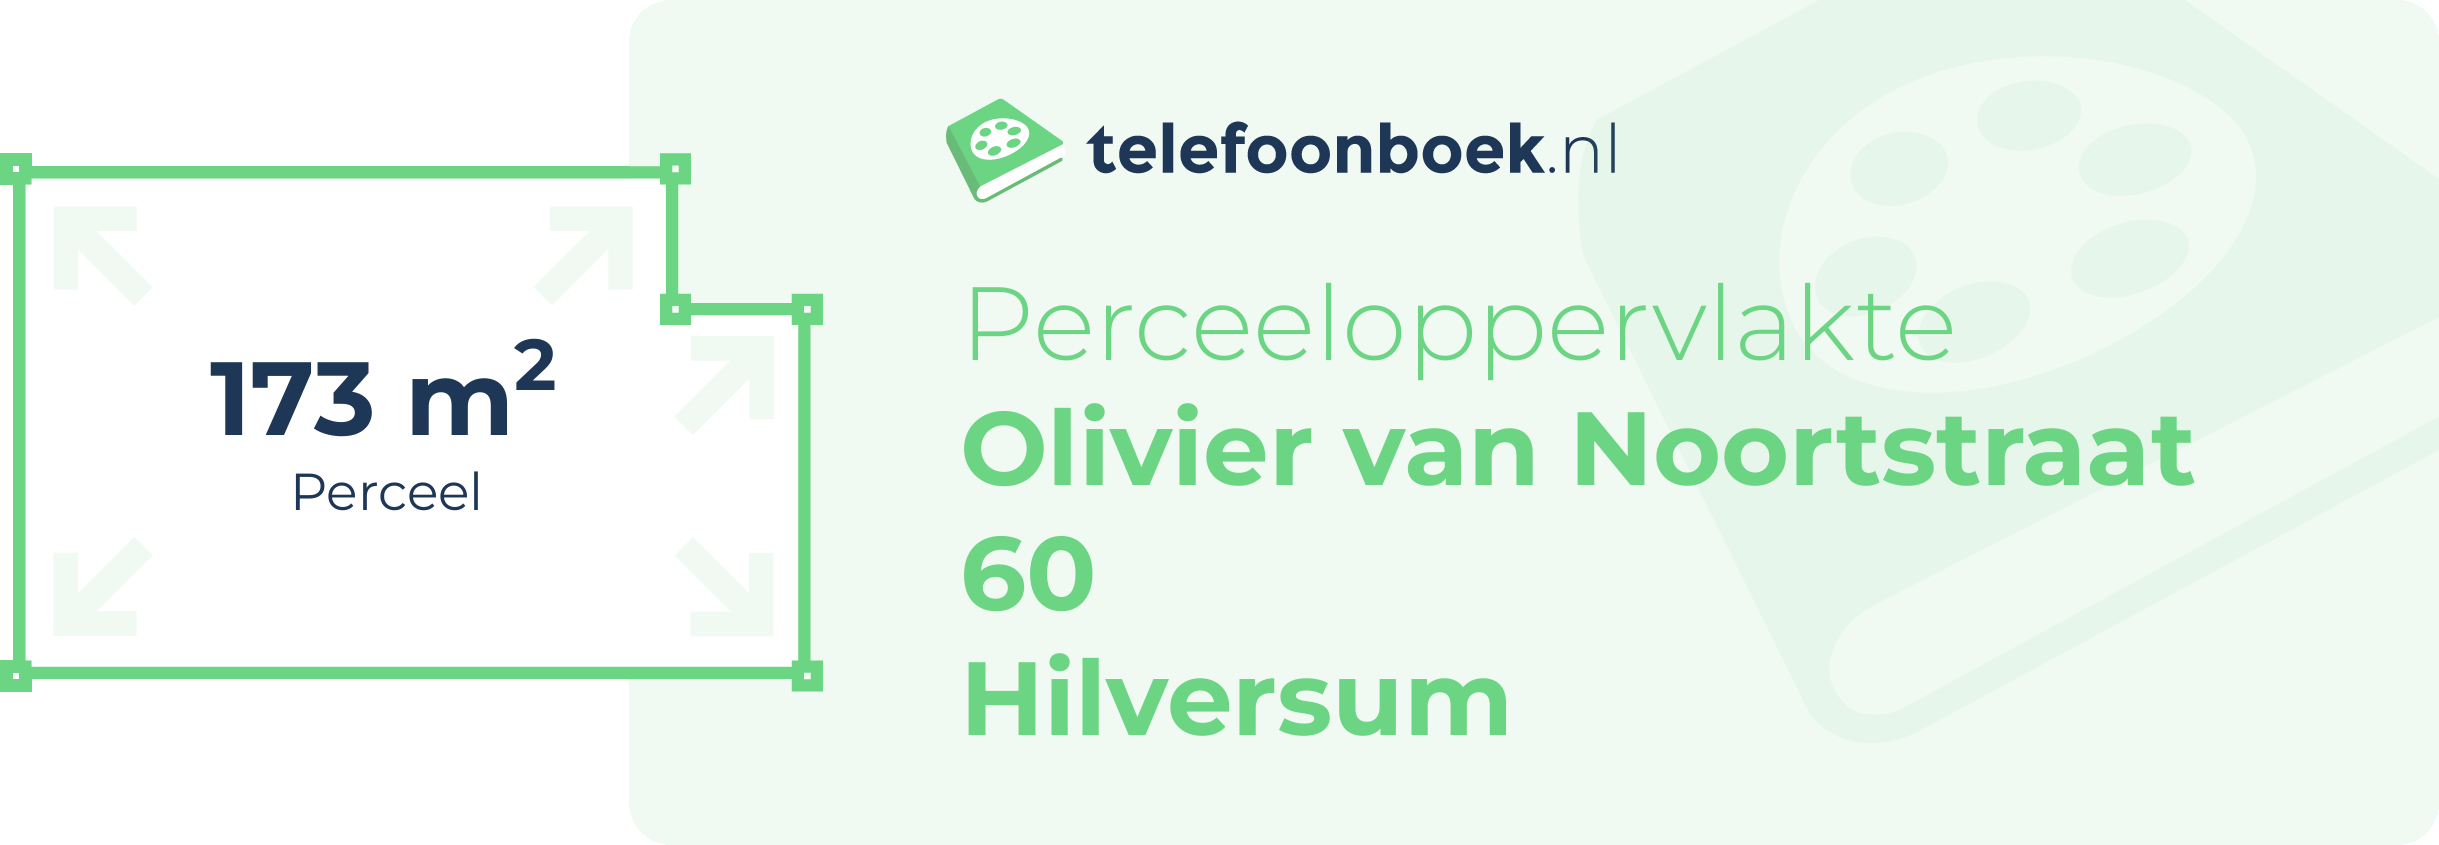 Perceeloppervlakte Olivier Van Noortstraat 60 Hilversum